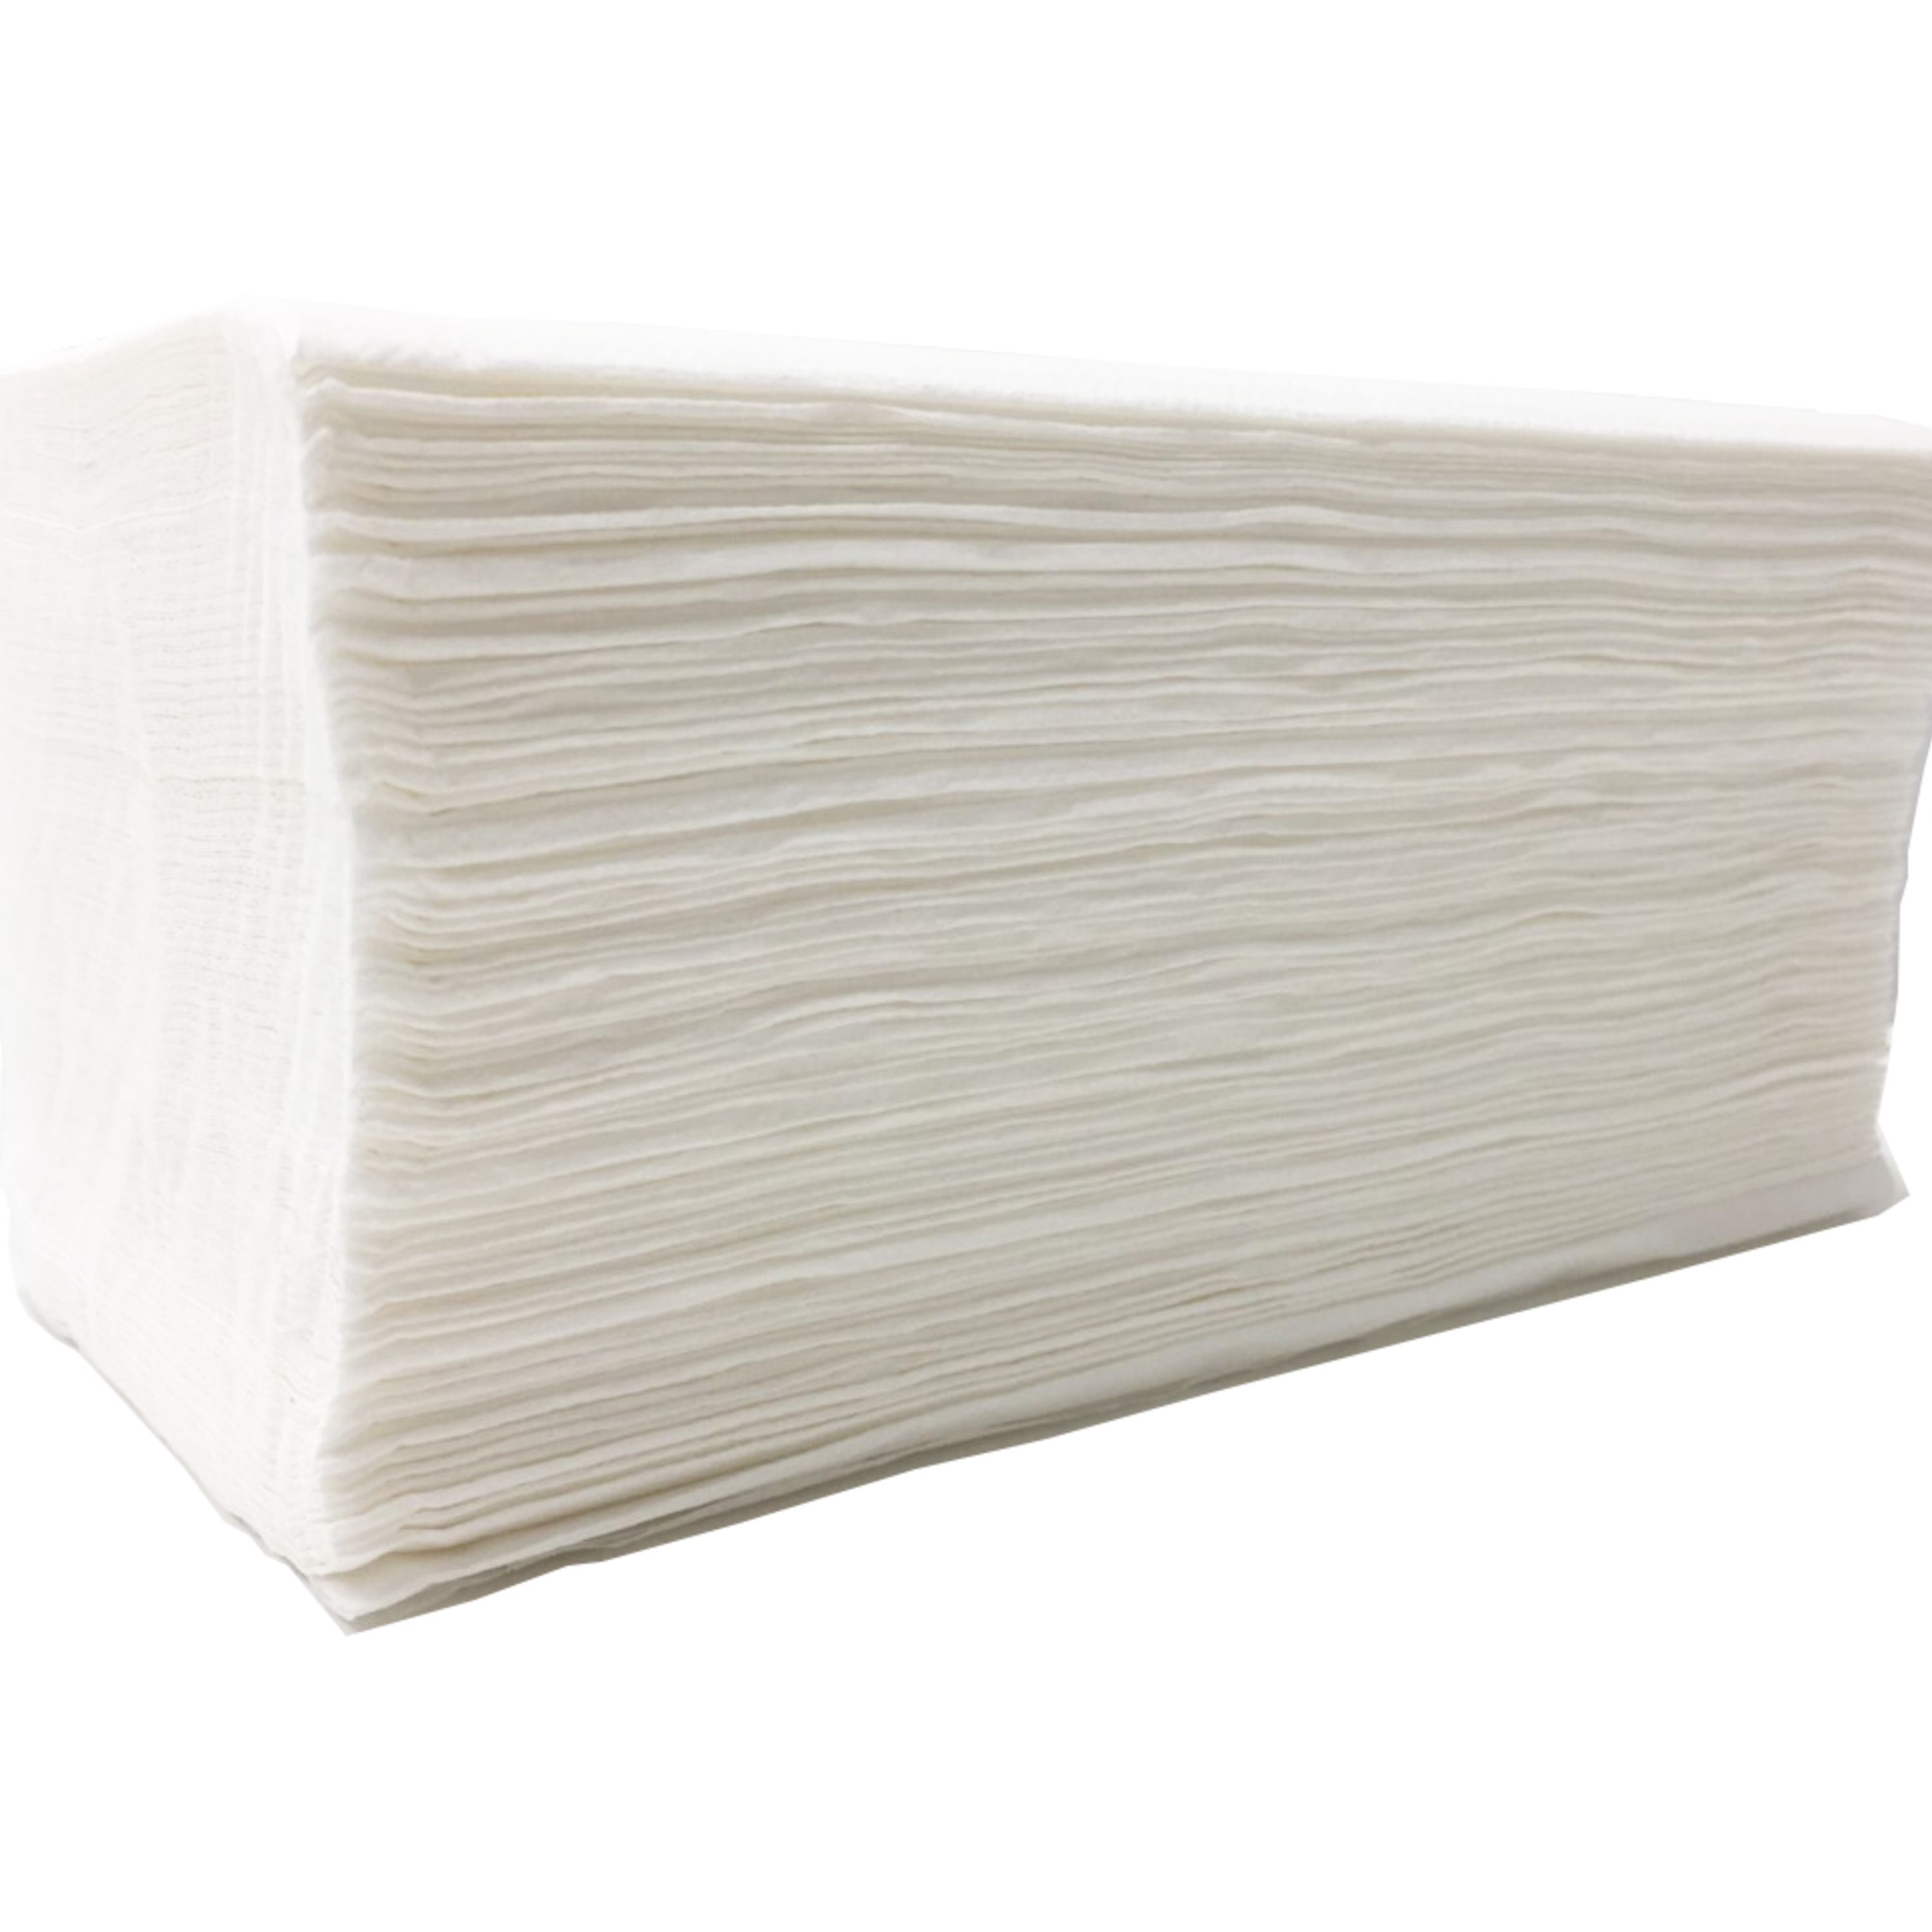 Bamboo V Fold Hand paper towel by Cheeky Panda Single – 200 sheets – By The Cheeky Panda